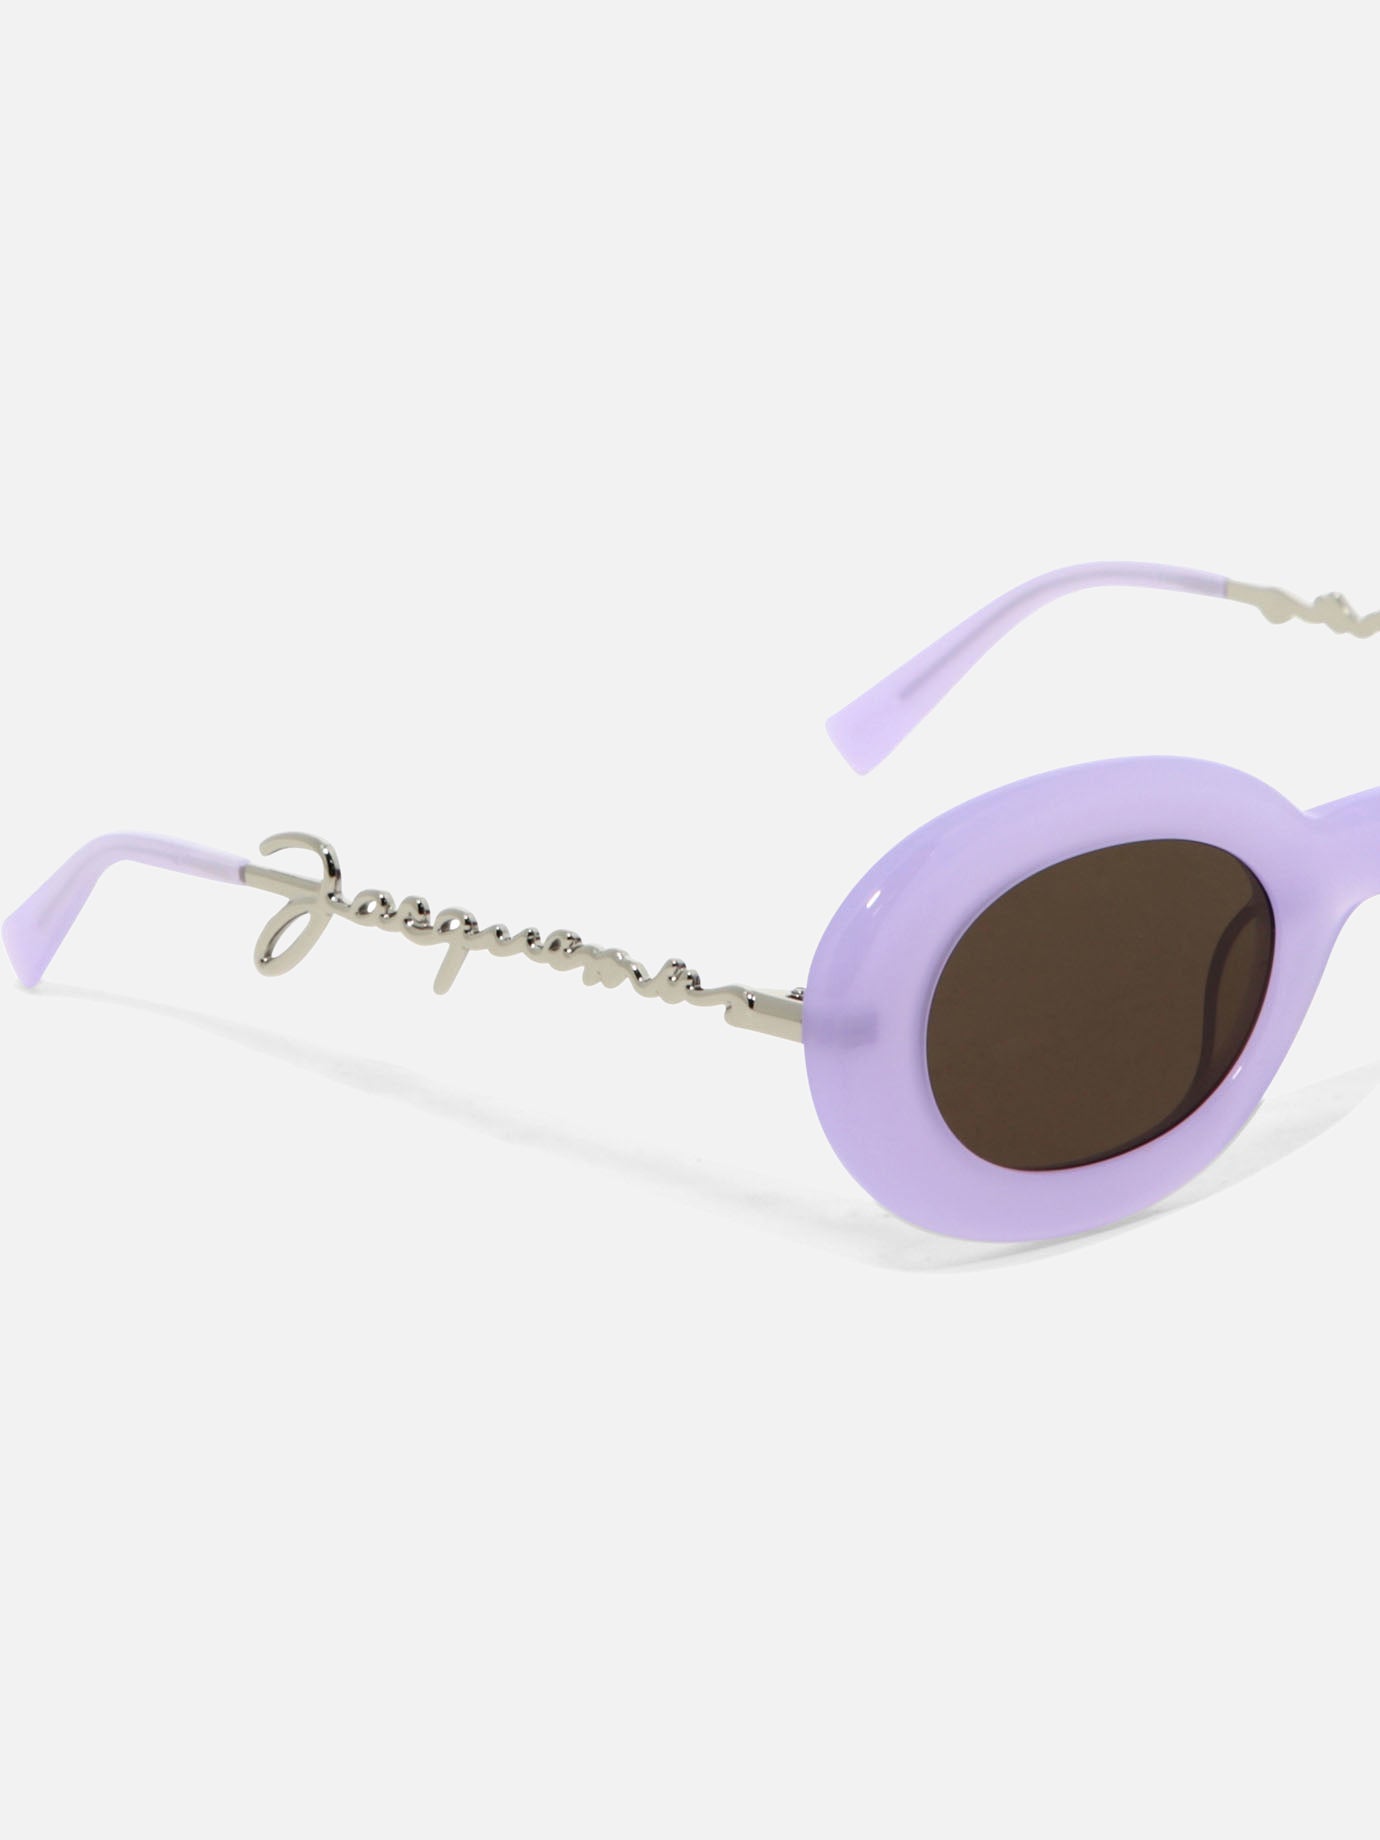 "Les lunettes Pralu" sunglasses